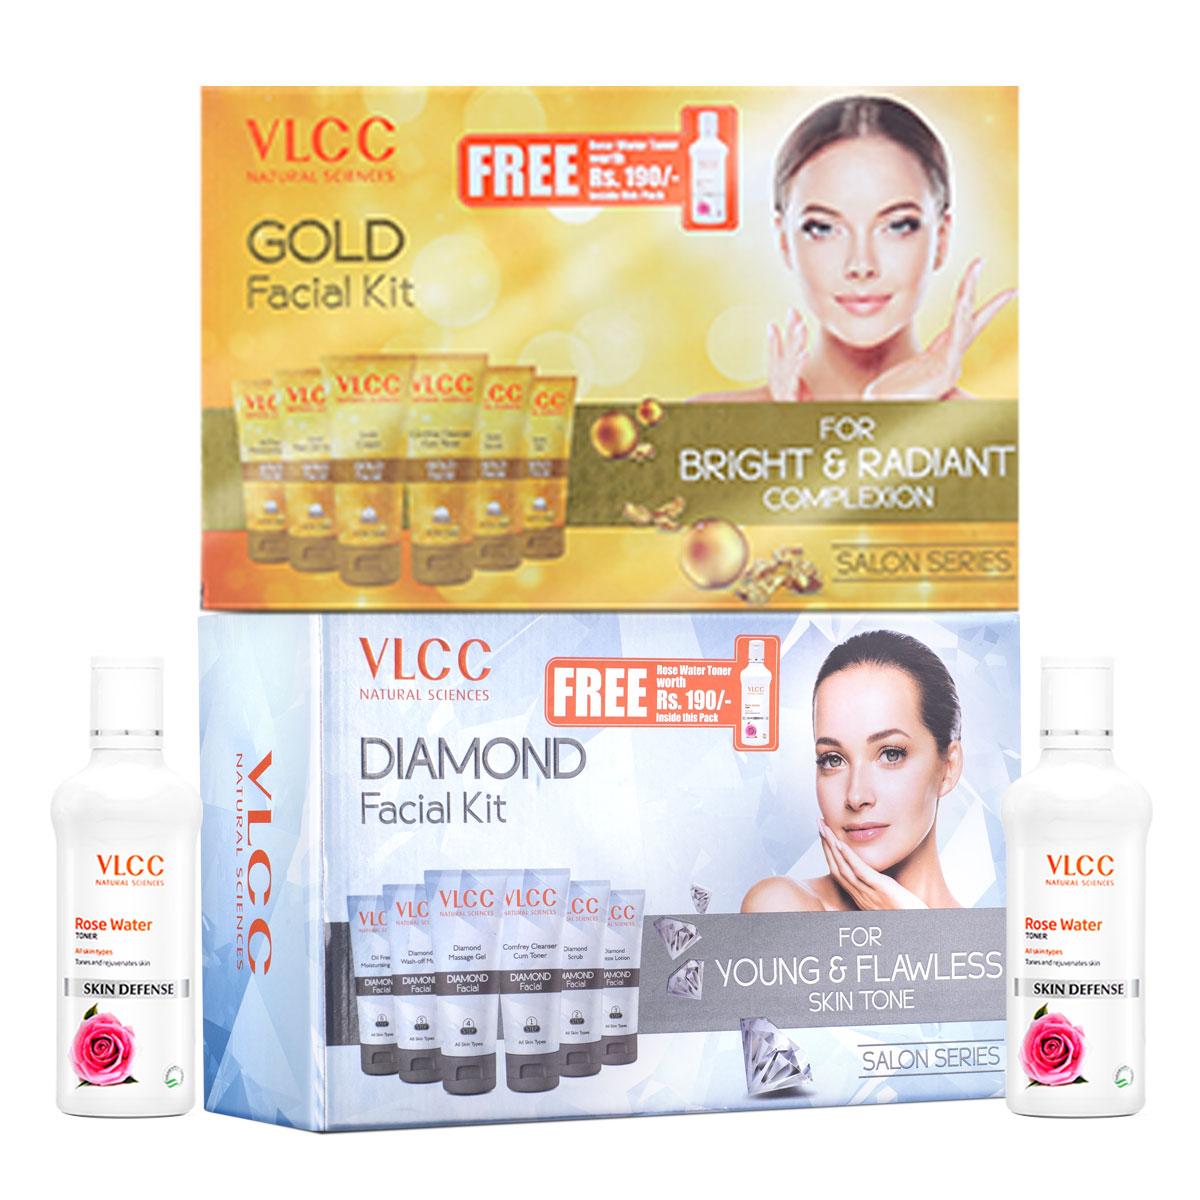 VLCC Gold Facial Kit + FREE Rose Water Toner &  Diamond Facial Kit + FREE Rose Water Toner